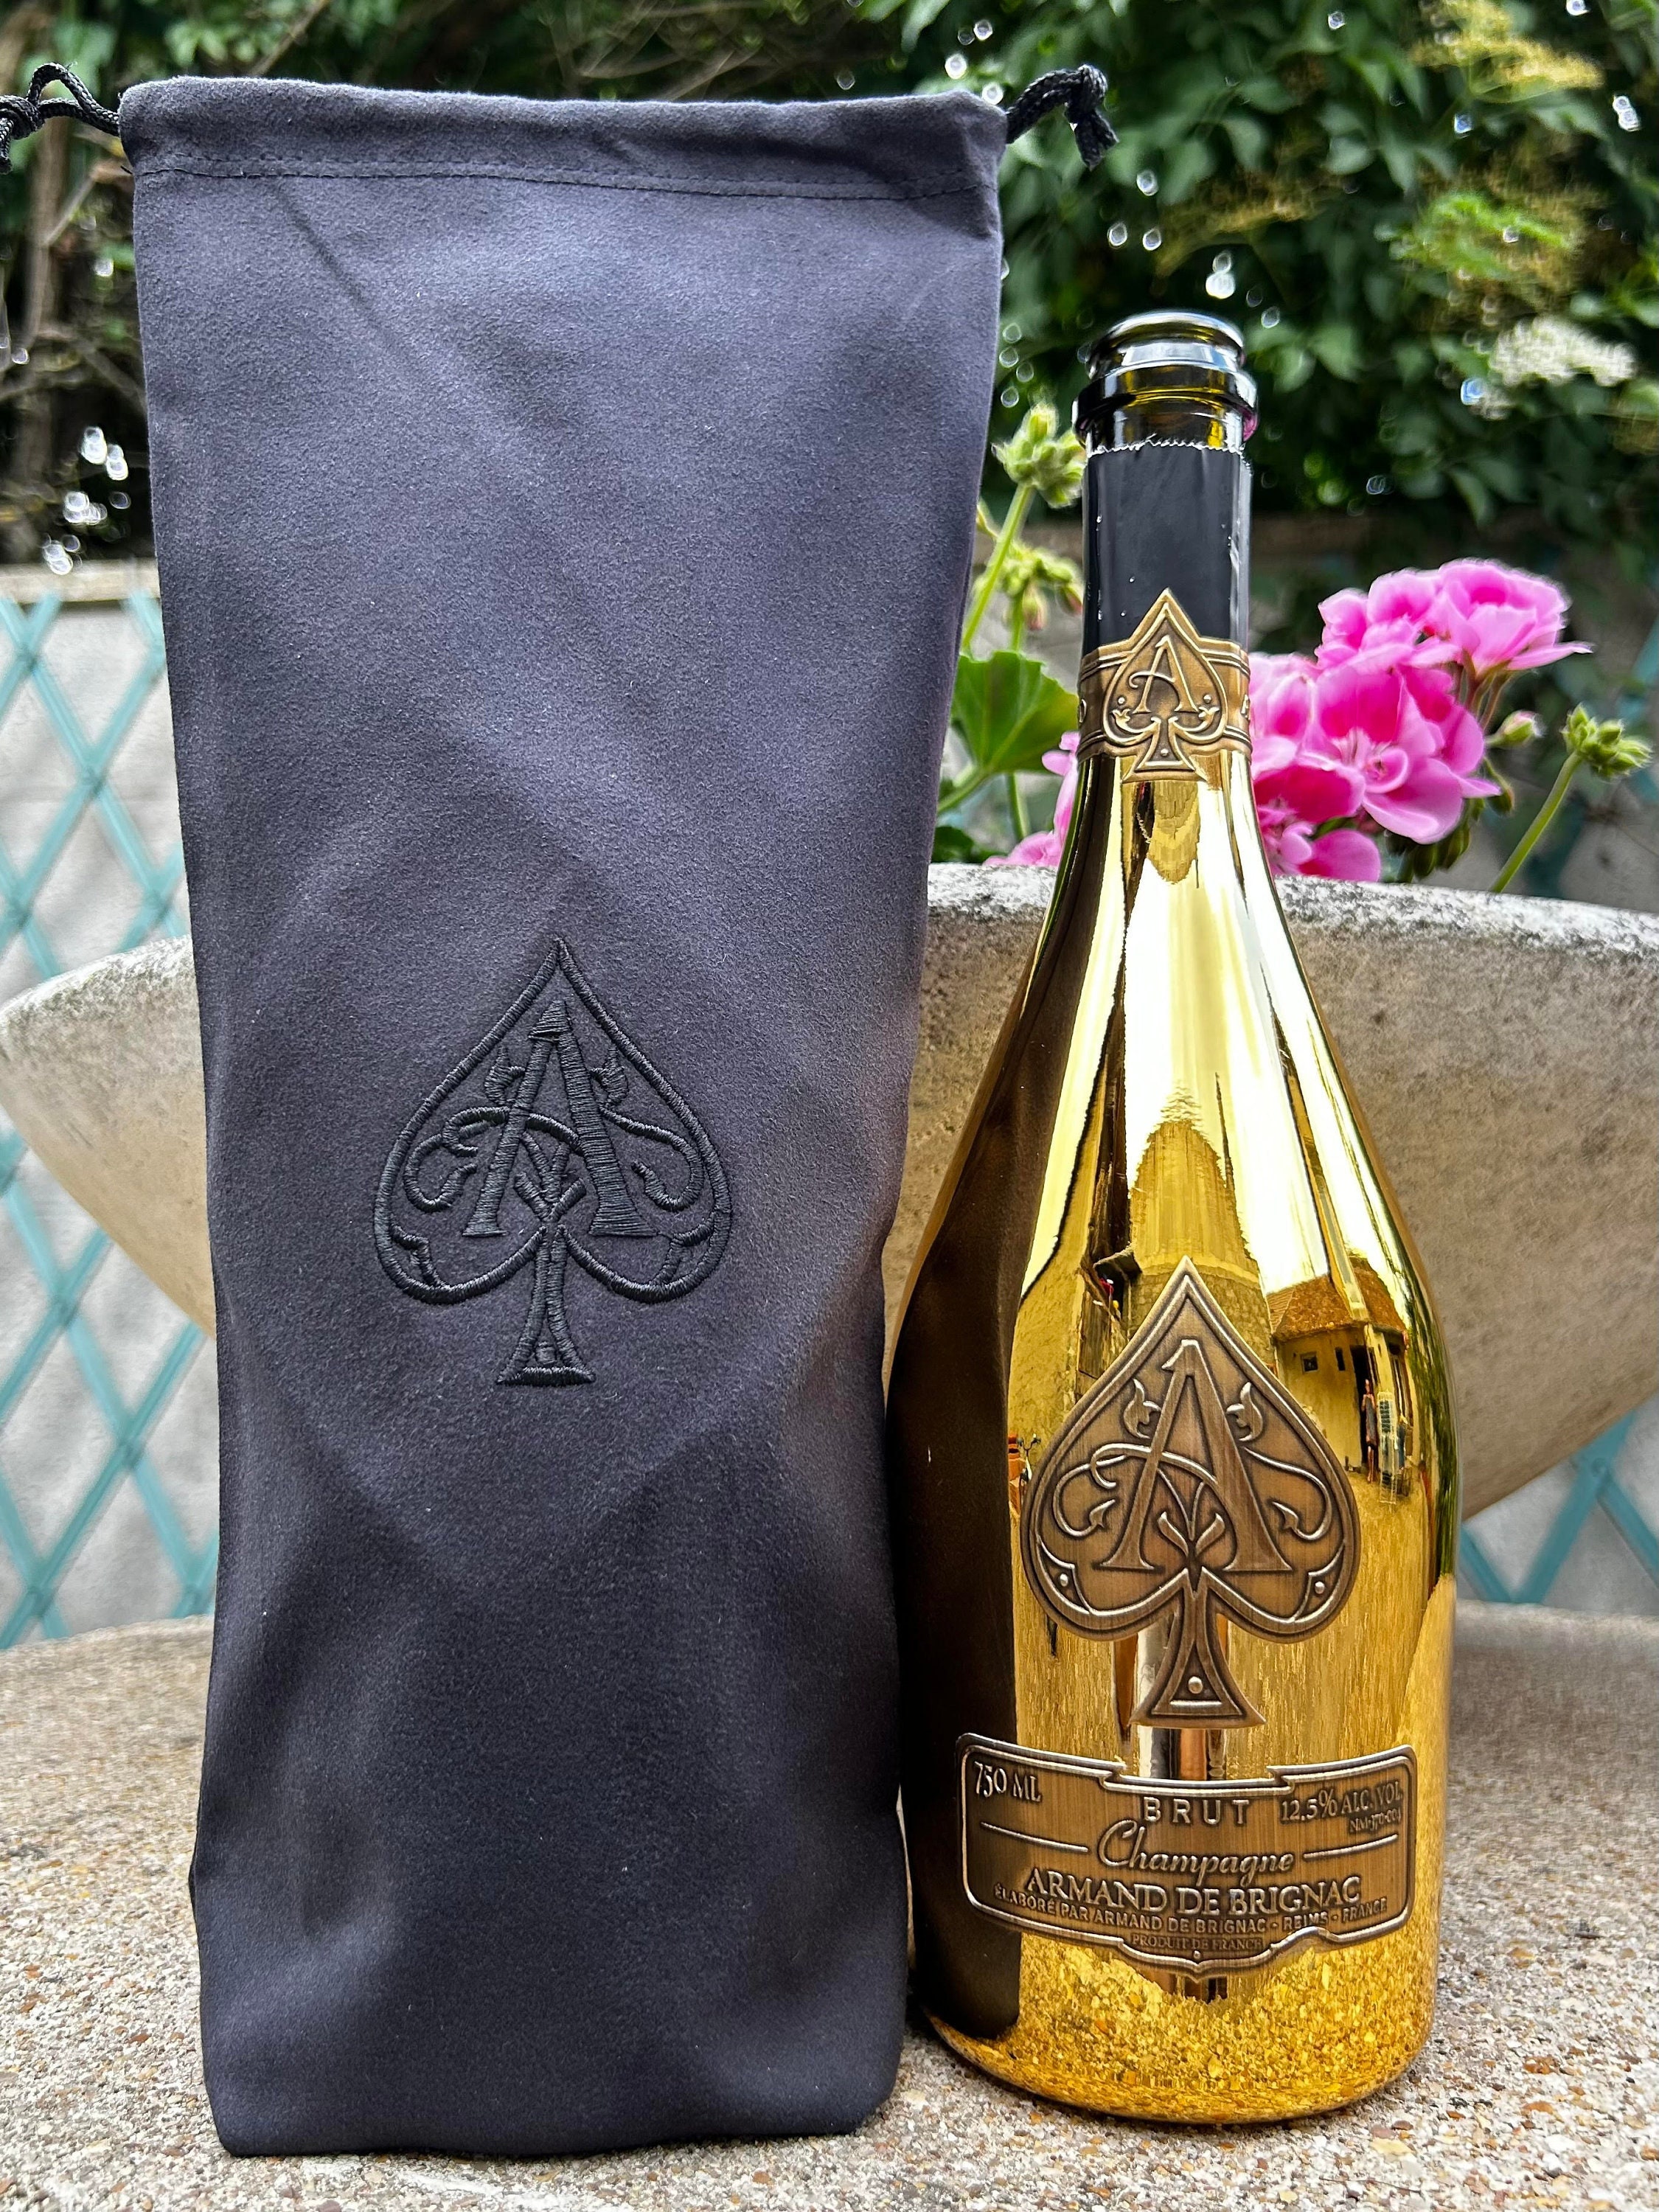 Armand de Brignac Ace of Spades Brut Gold Champagne - 750ml Bottle